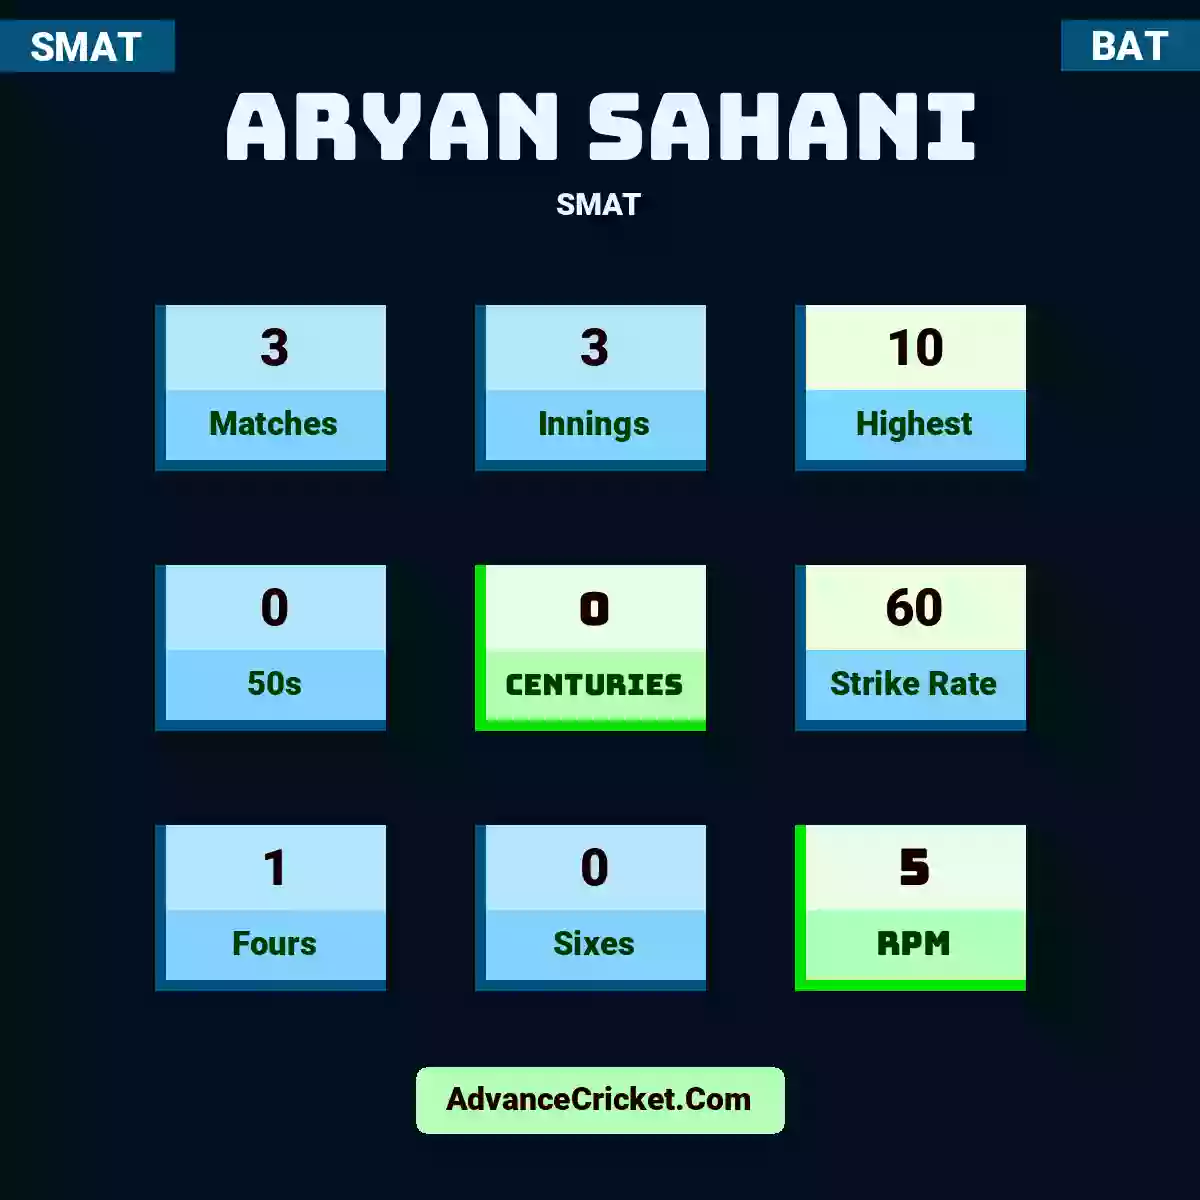 Aryan Sahani SMAT , Aryan Sahani played 3 matches, scored 10 runs as highest, 0 half-centuries, and 0 centuries, with a strike rate of 60. A.Sahani hit 1 fours and 0 sixes, with an RPM of 5.